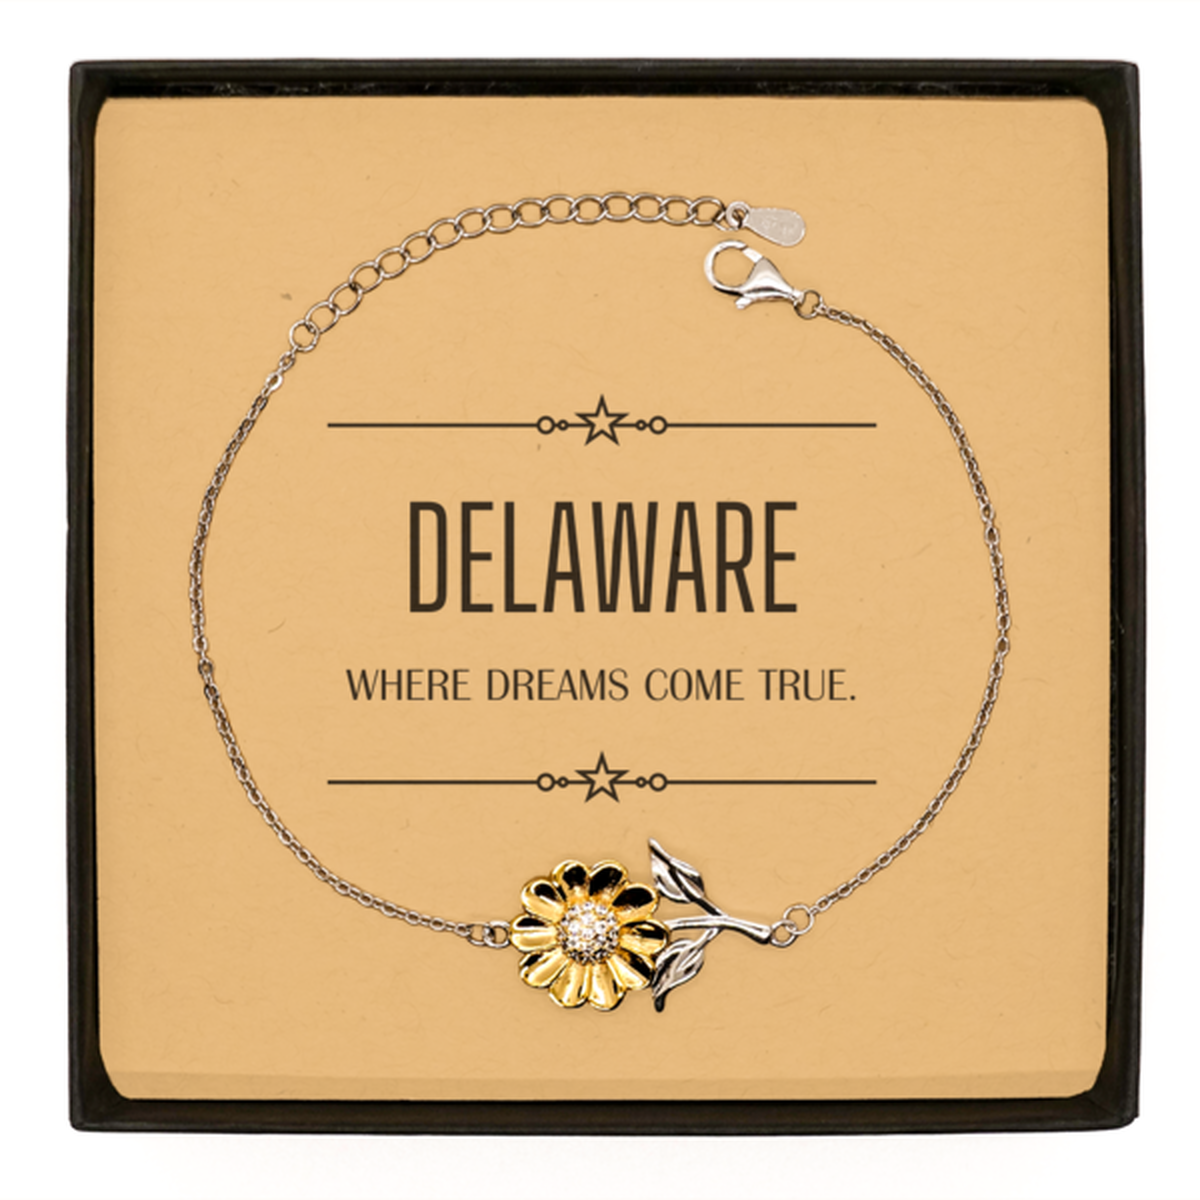 Love Delaware State Sunflower Bracelet, Delaware Where dreams come true, Birthday Inspirational Gifts For Delaware Men, Women, Friends